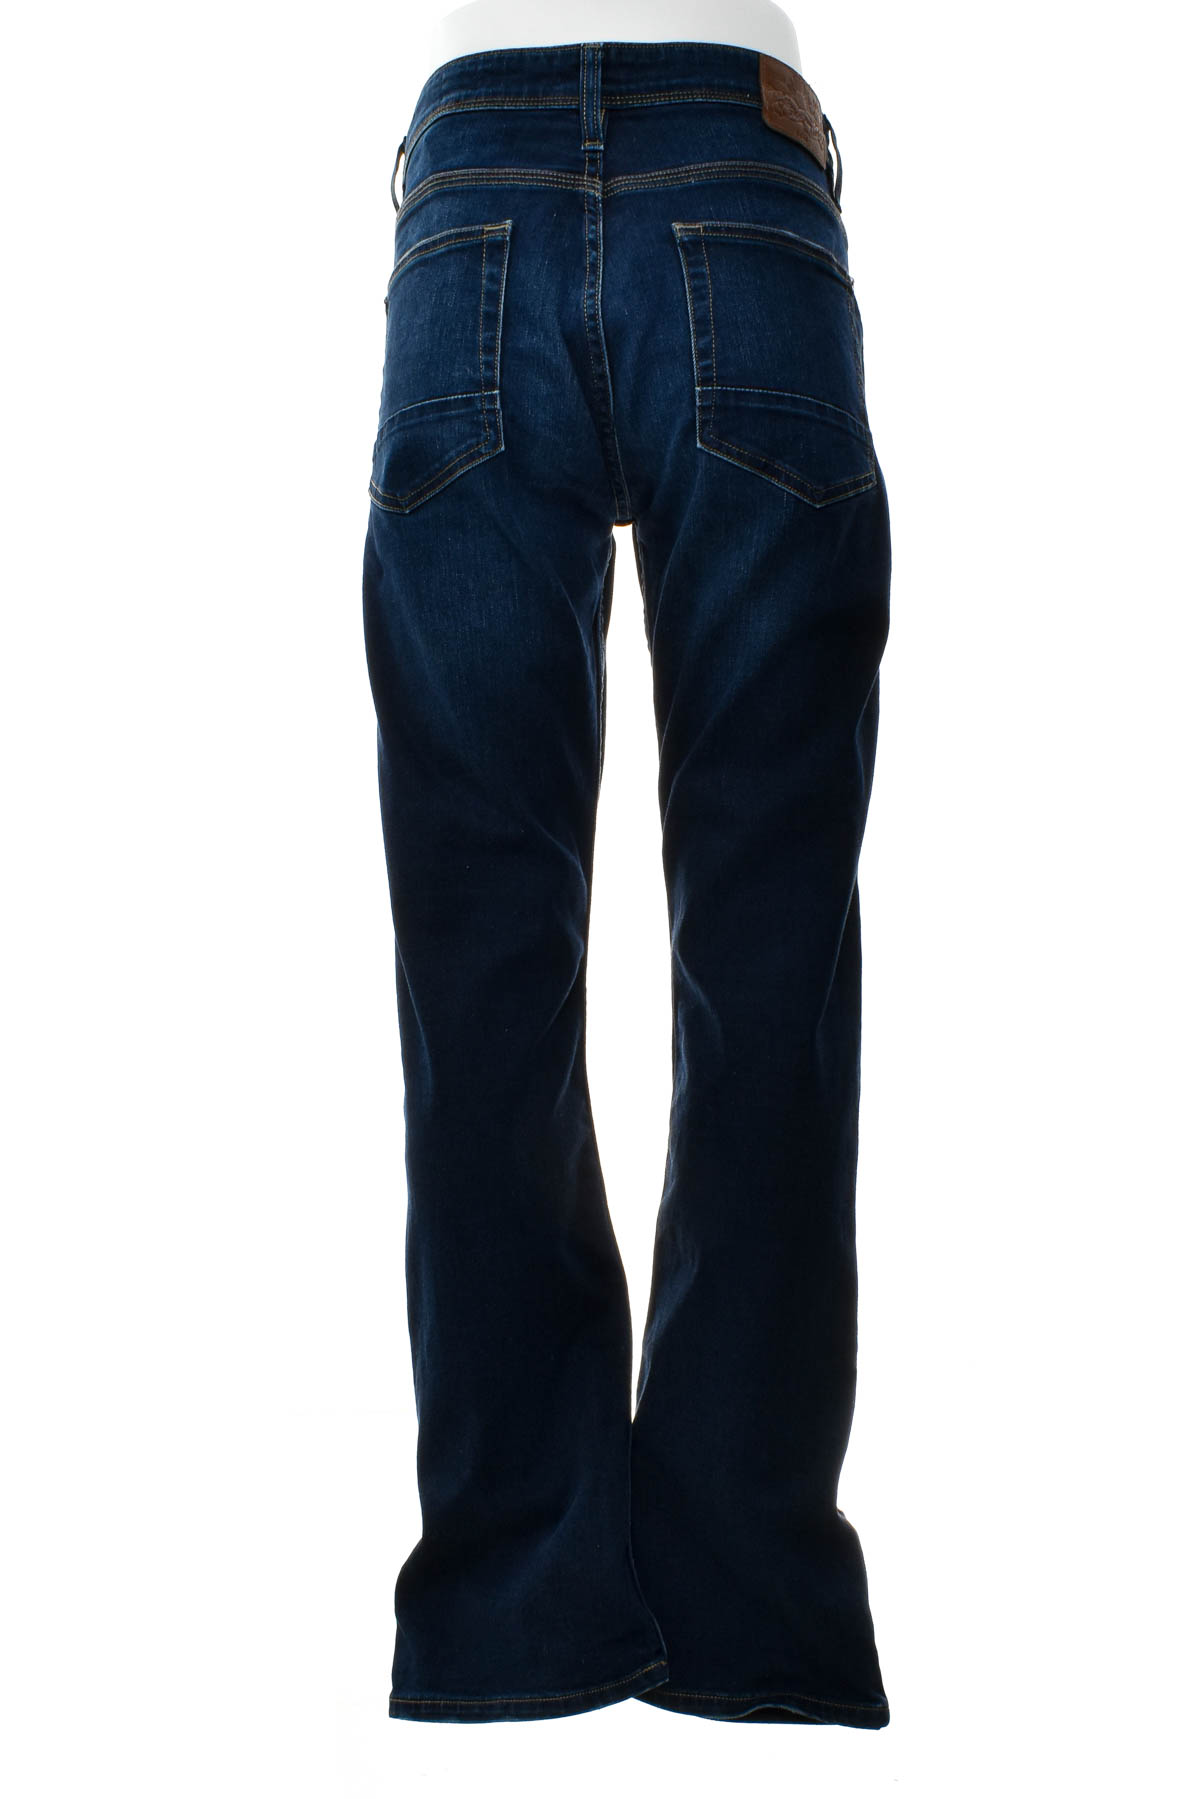 Men's jeans - Celio* - 1